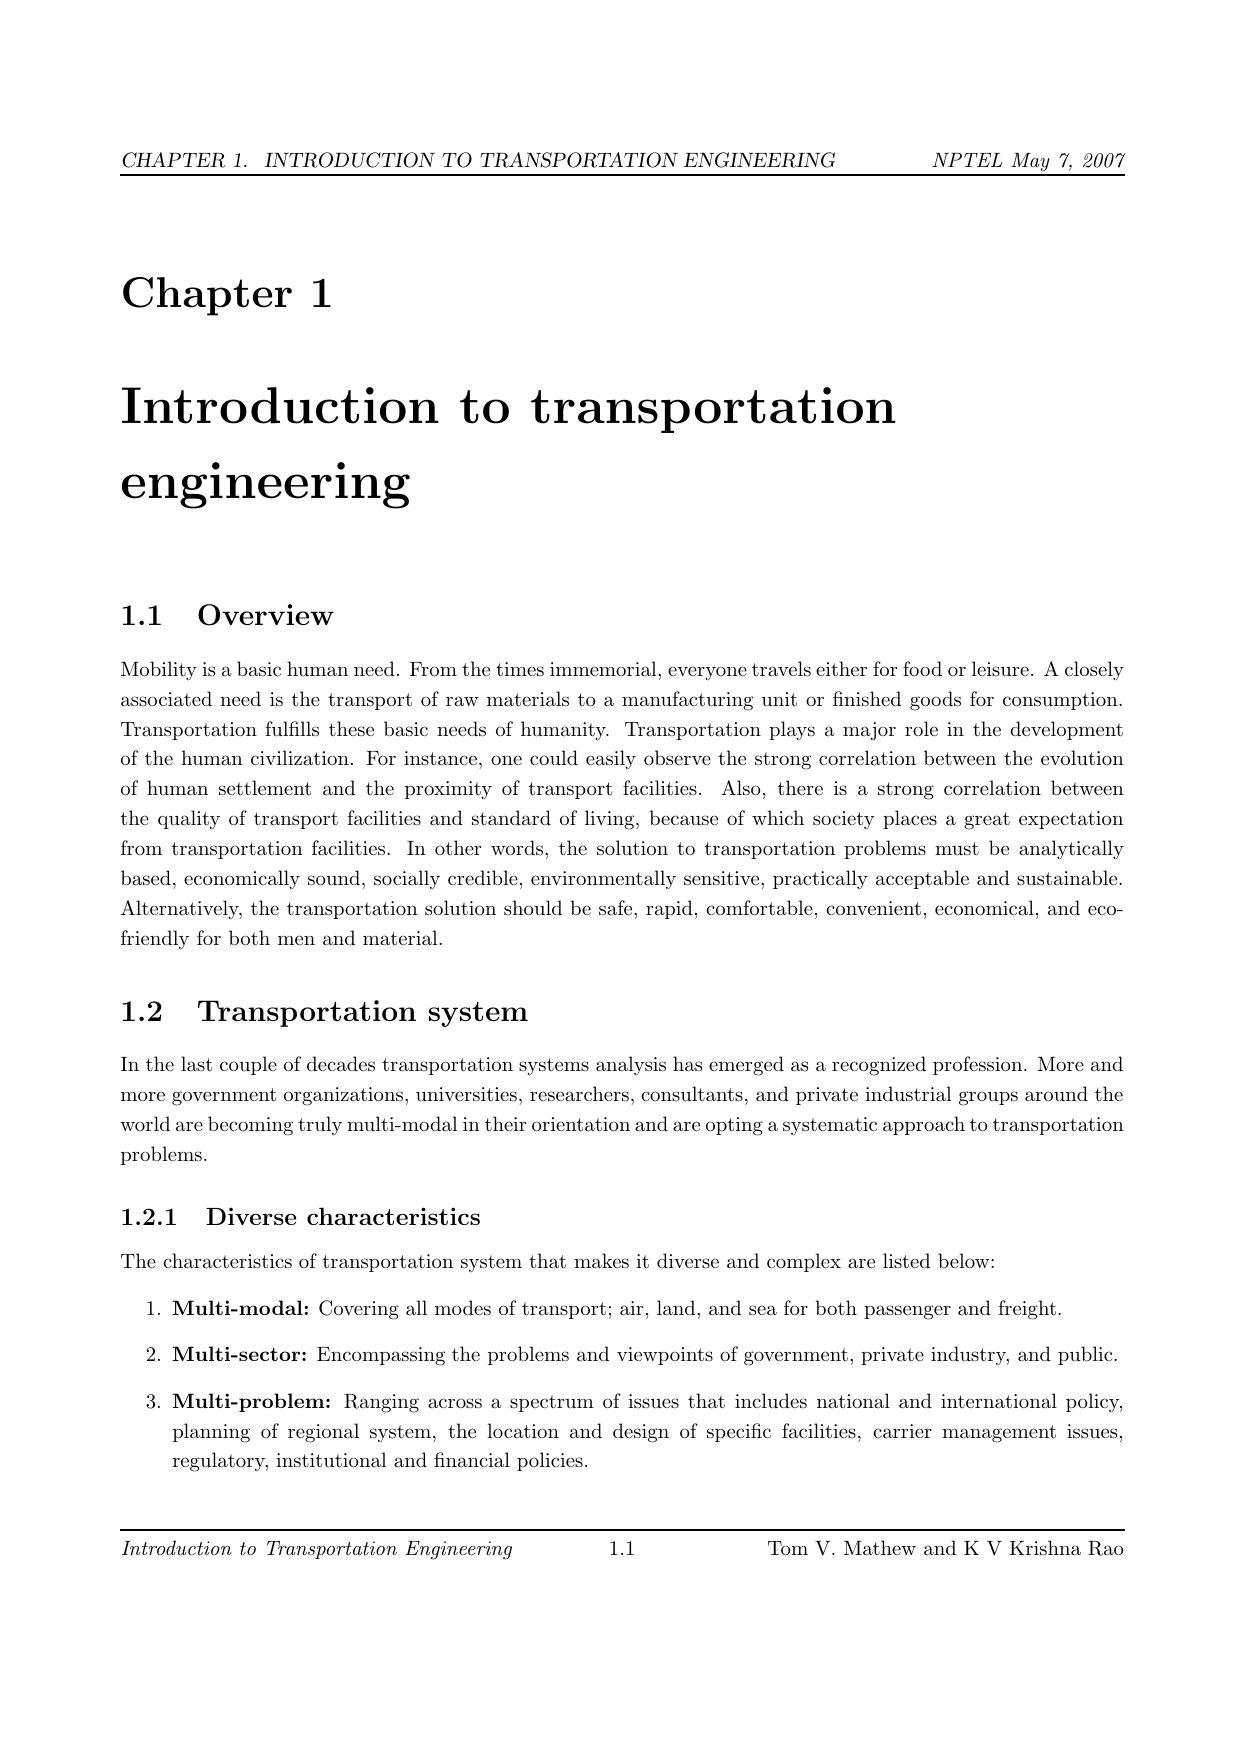 Introduction toTransportation Engineering 2007